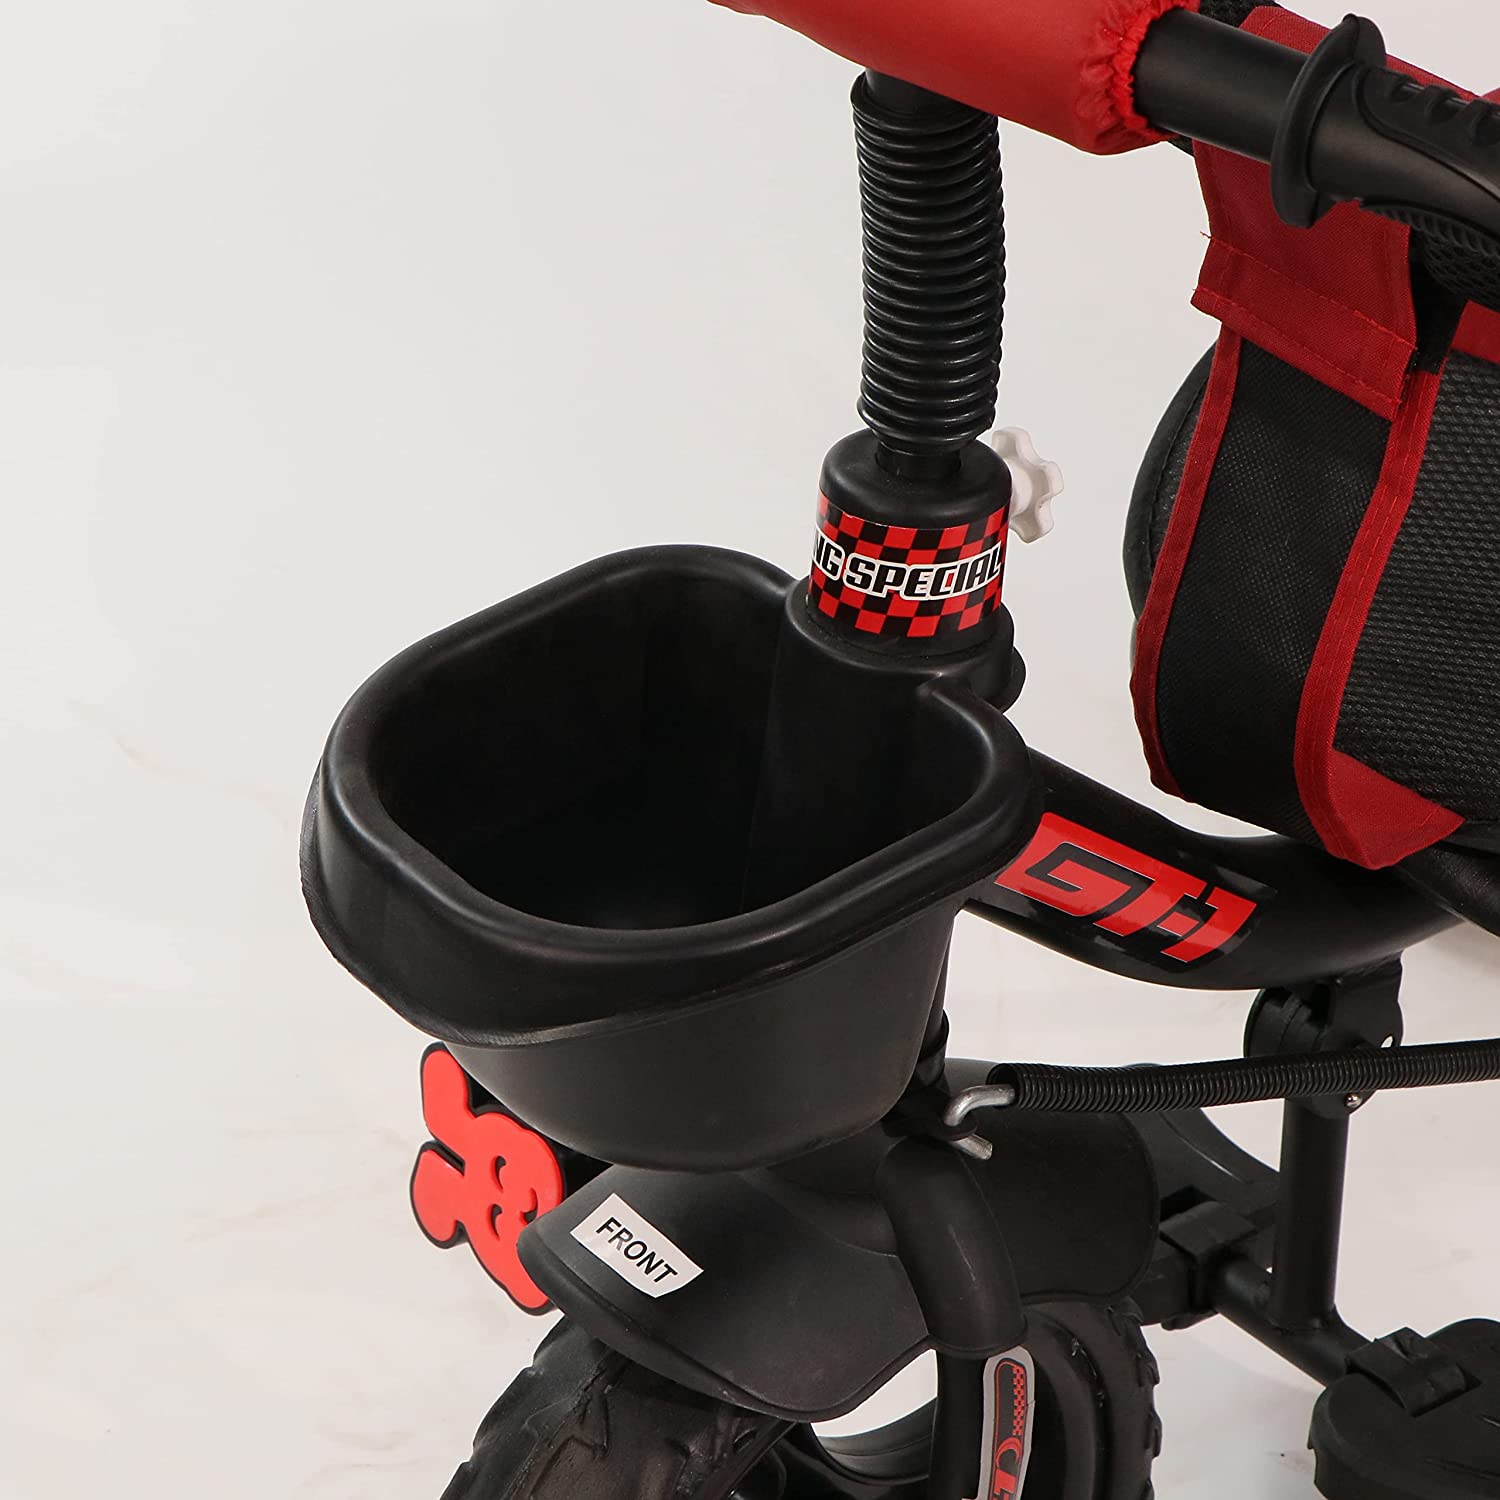 Luusa GT500 Hooded Tricycle Plug N Play Kids / Baby Tricycle with Parental Control (Red)